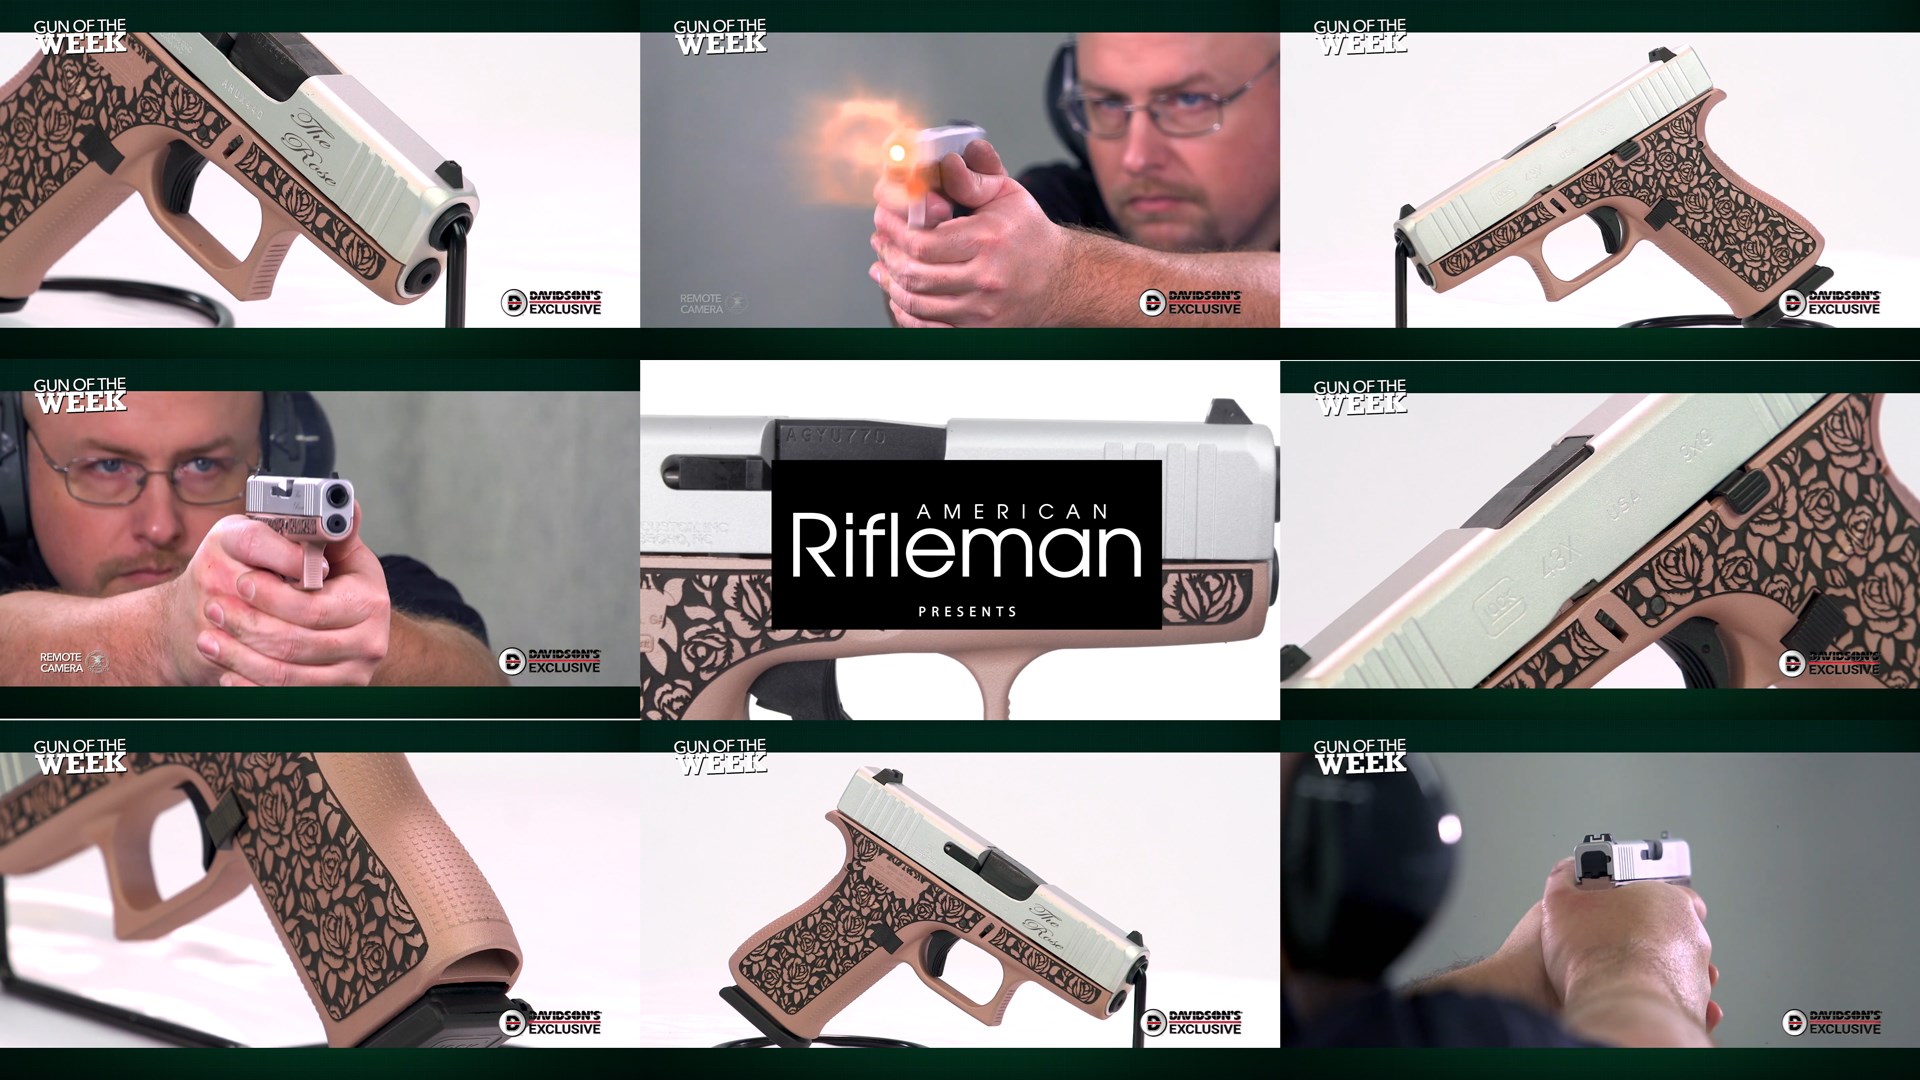 AMERICAN RIFLEMAN PRESENTS Davidson's Exclusive Glock G43X The Rose gun pistol 9 mm engraving floral pattern rose-gold color guns man shooting